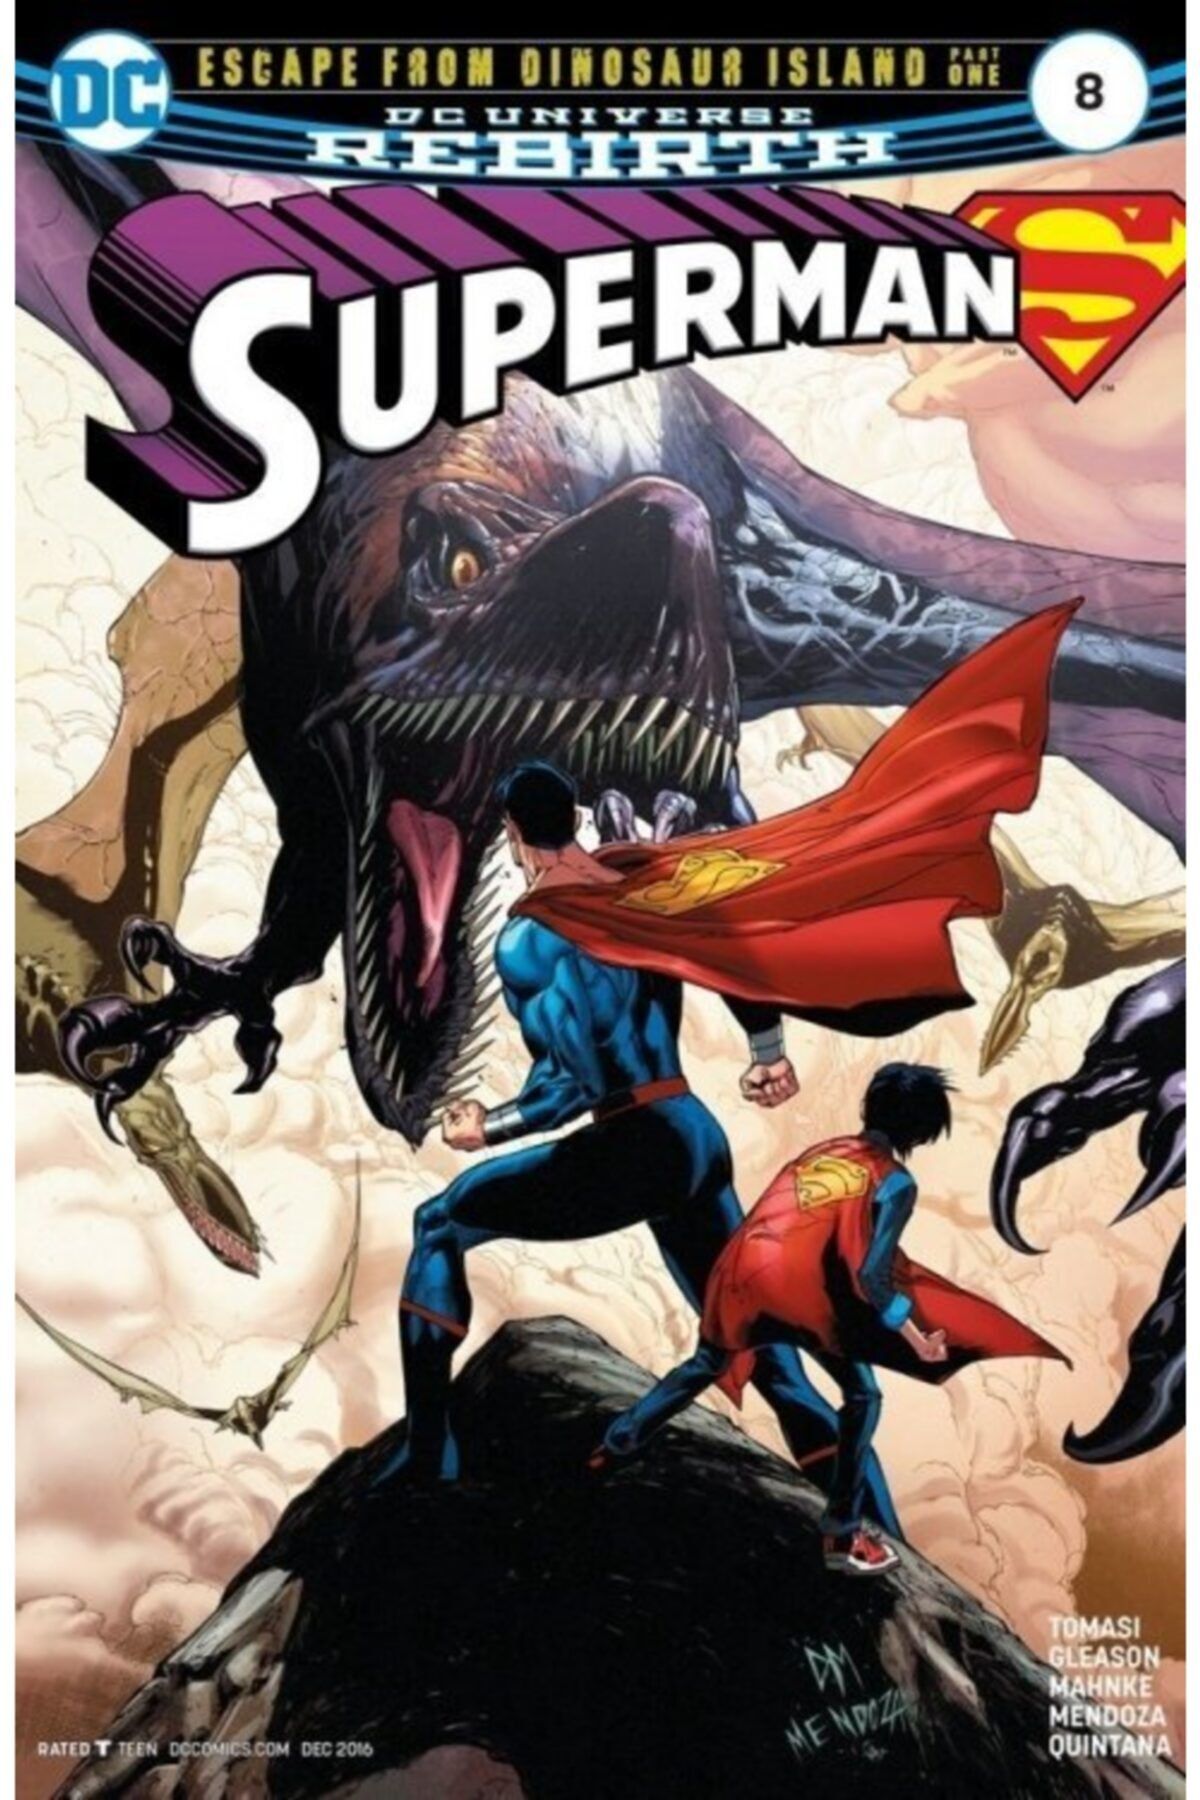 TM & DC Comics-Warner Bros Superman (2016-) #8 Fasikül Ingilizce Çizgi Roman